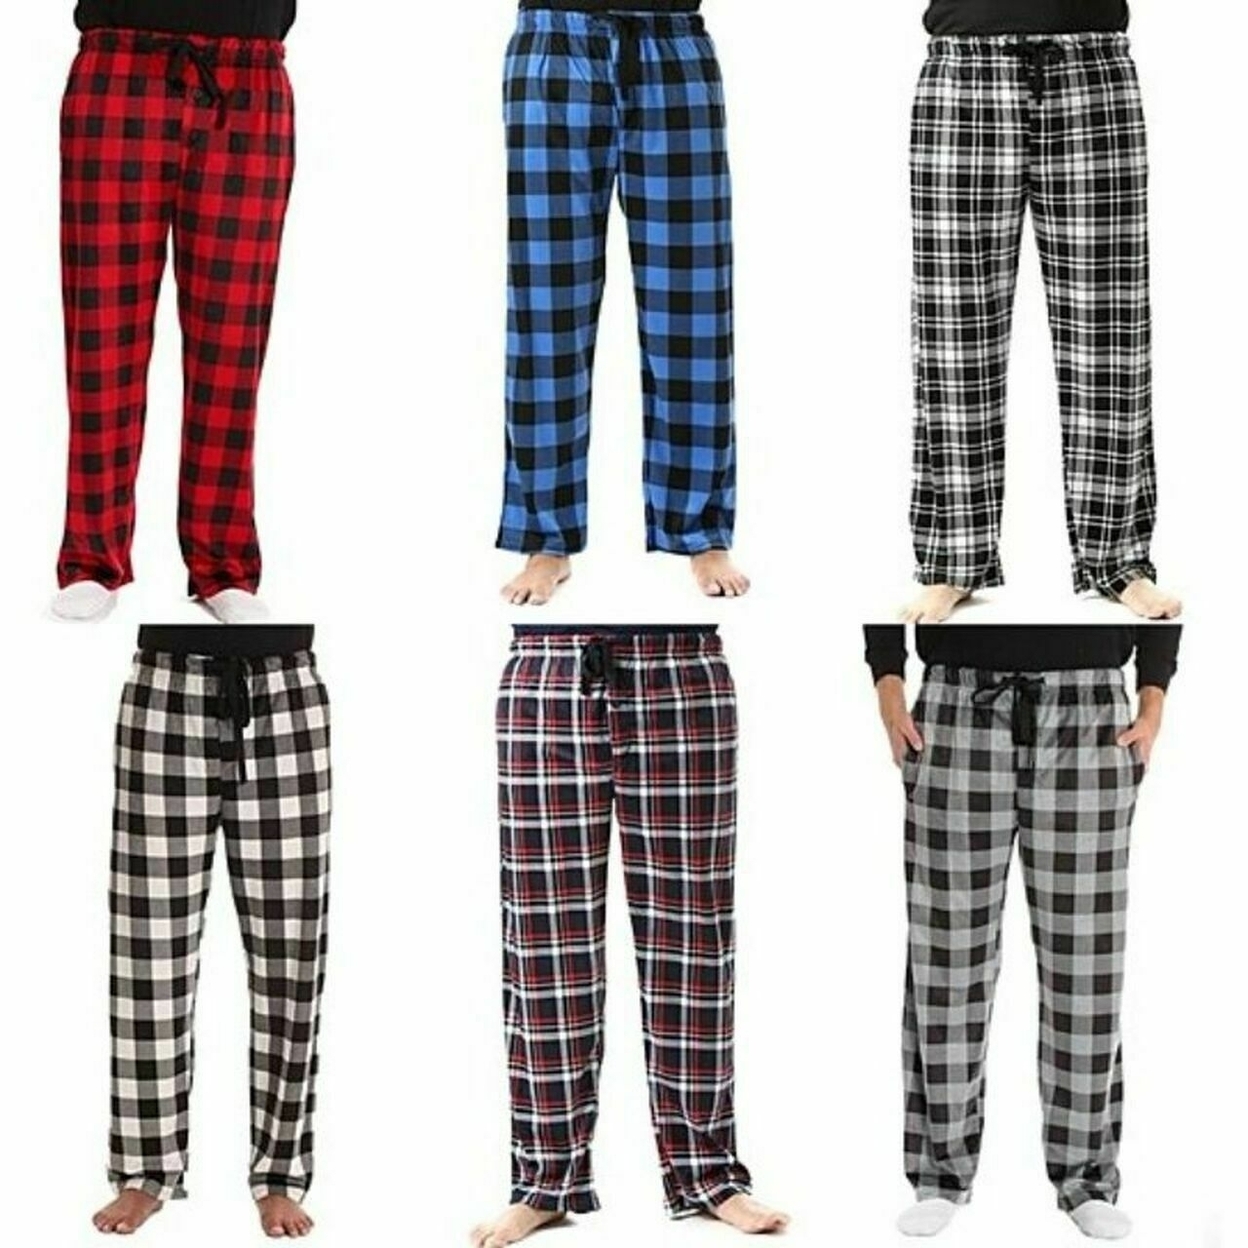 2-Pack: Men's Ultra Soft Cozy Flannel Fleece Plaid Pajama Sleep Bottom Lounge Pants - Black & Blue, Small